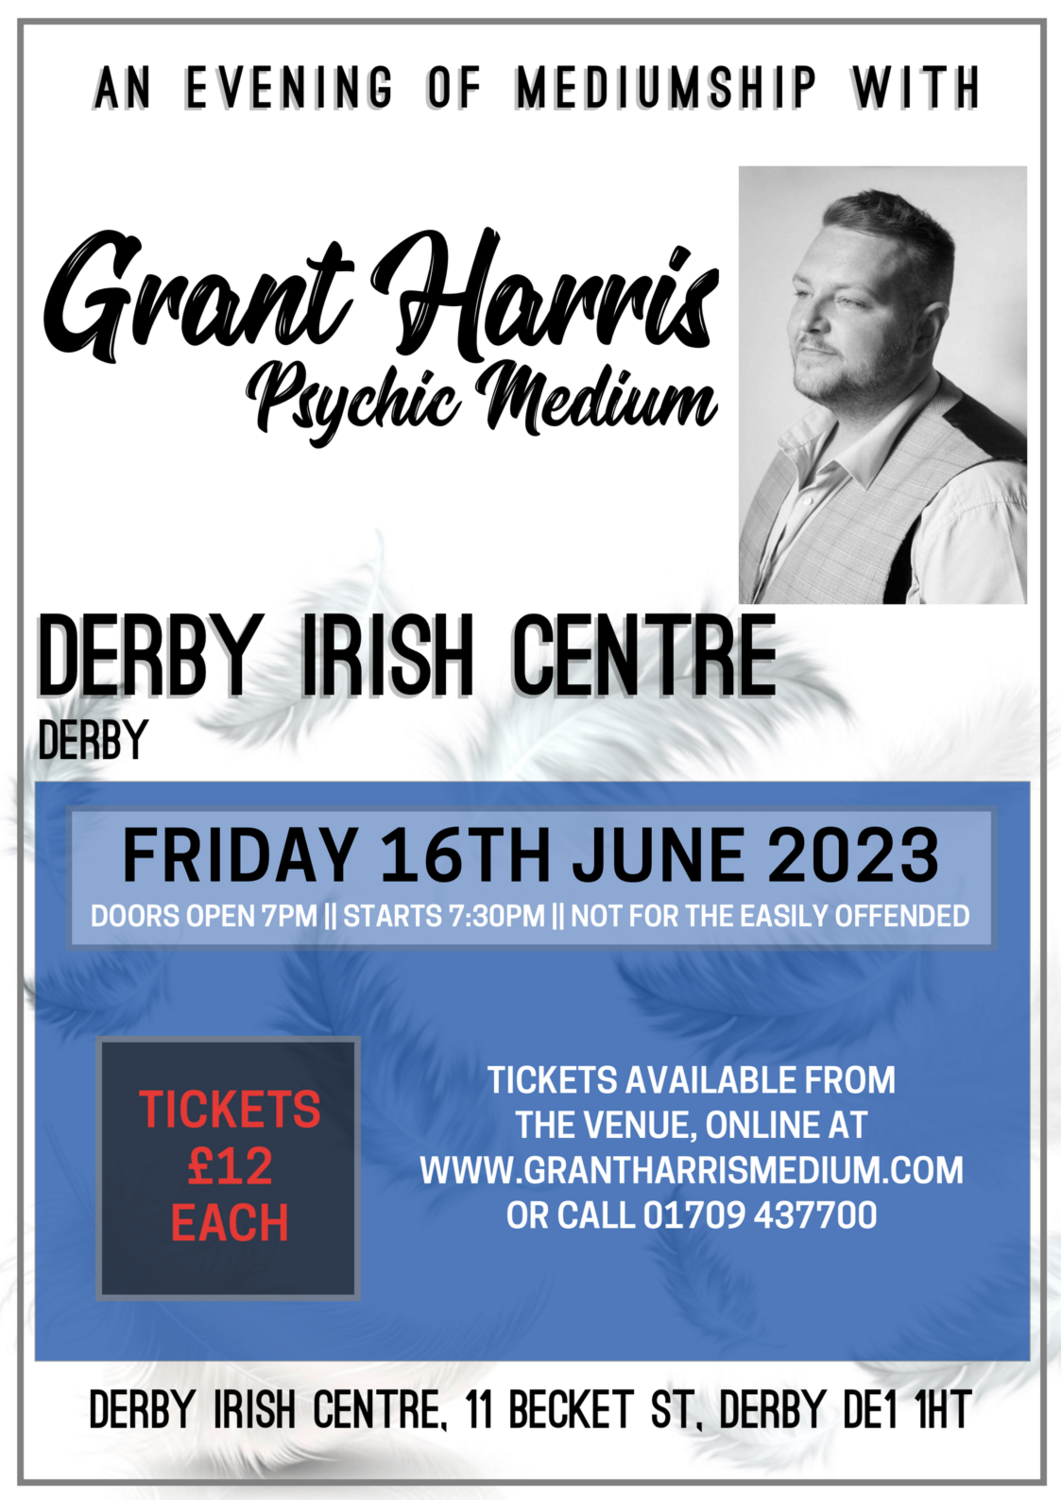 Derby Irish Centre, Derby, Friday 16th June 2023